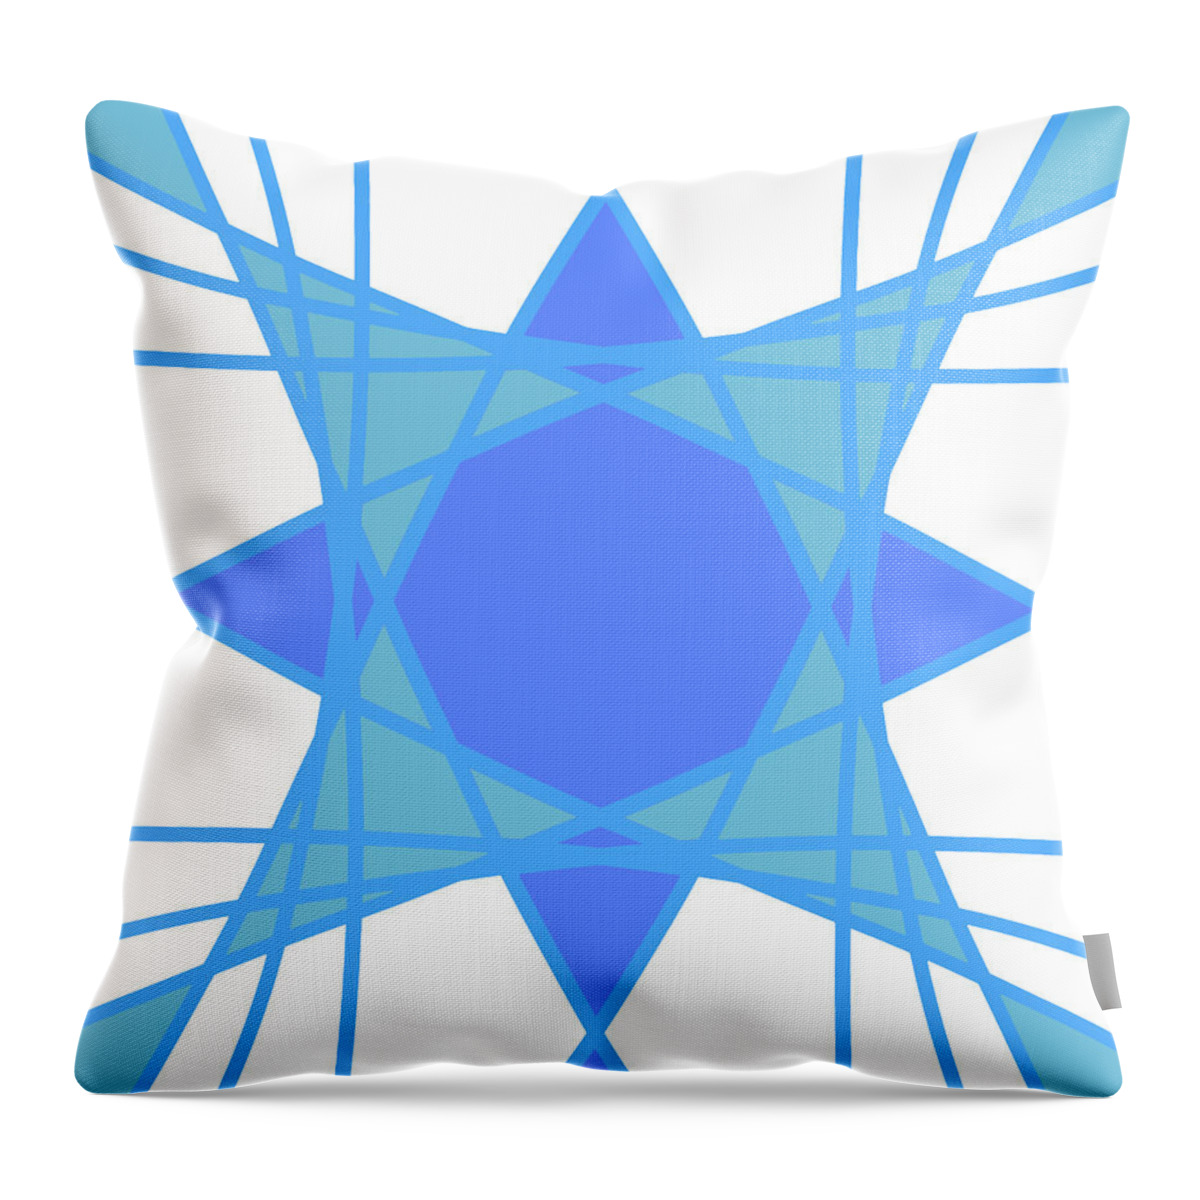 Home Decor Throw Pillow featuring the digital art Abstract Flower - Modern Design Pattern by Patricia Awapara